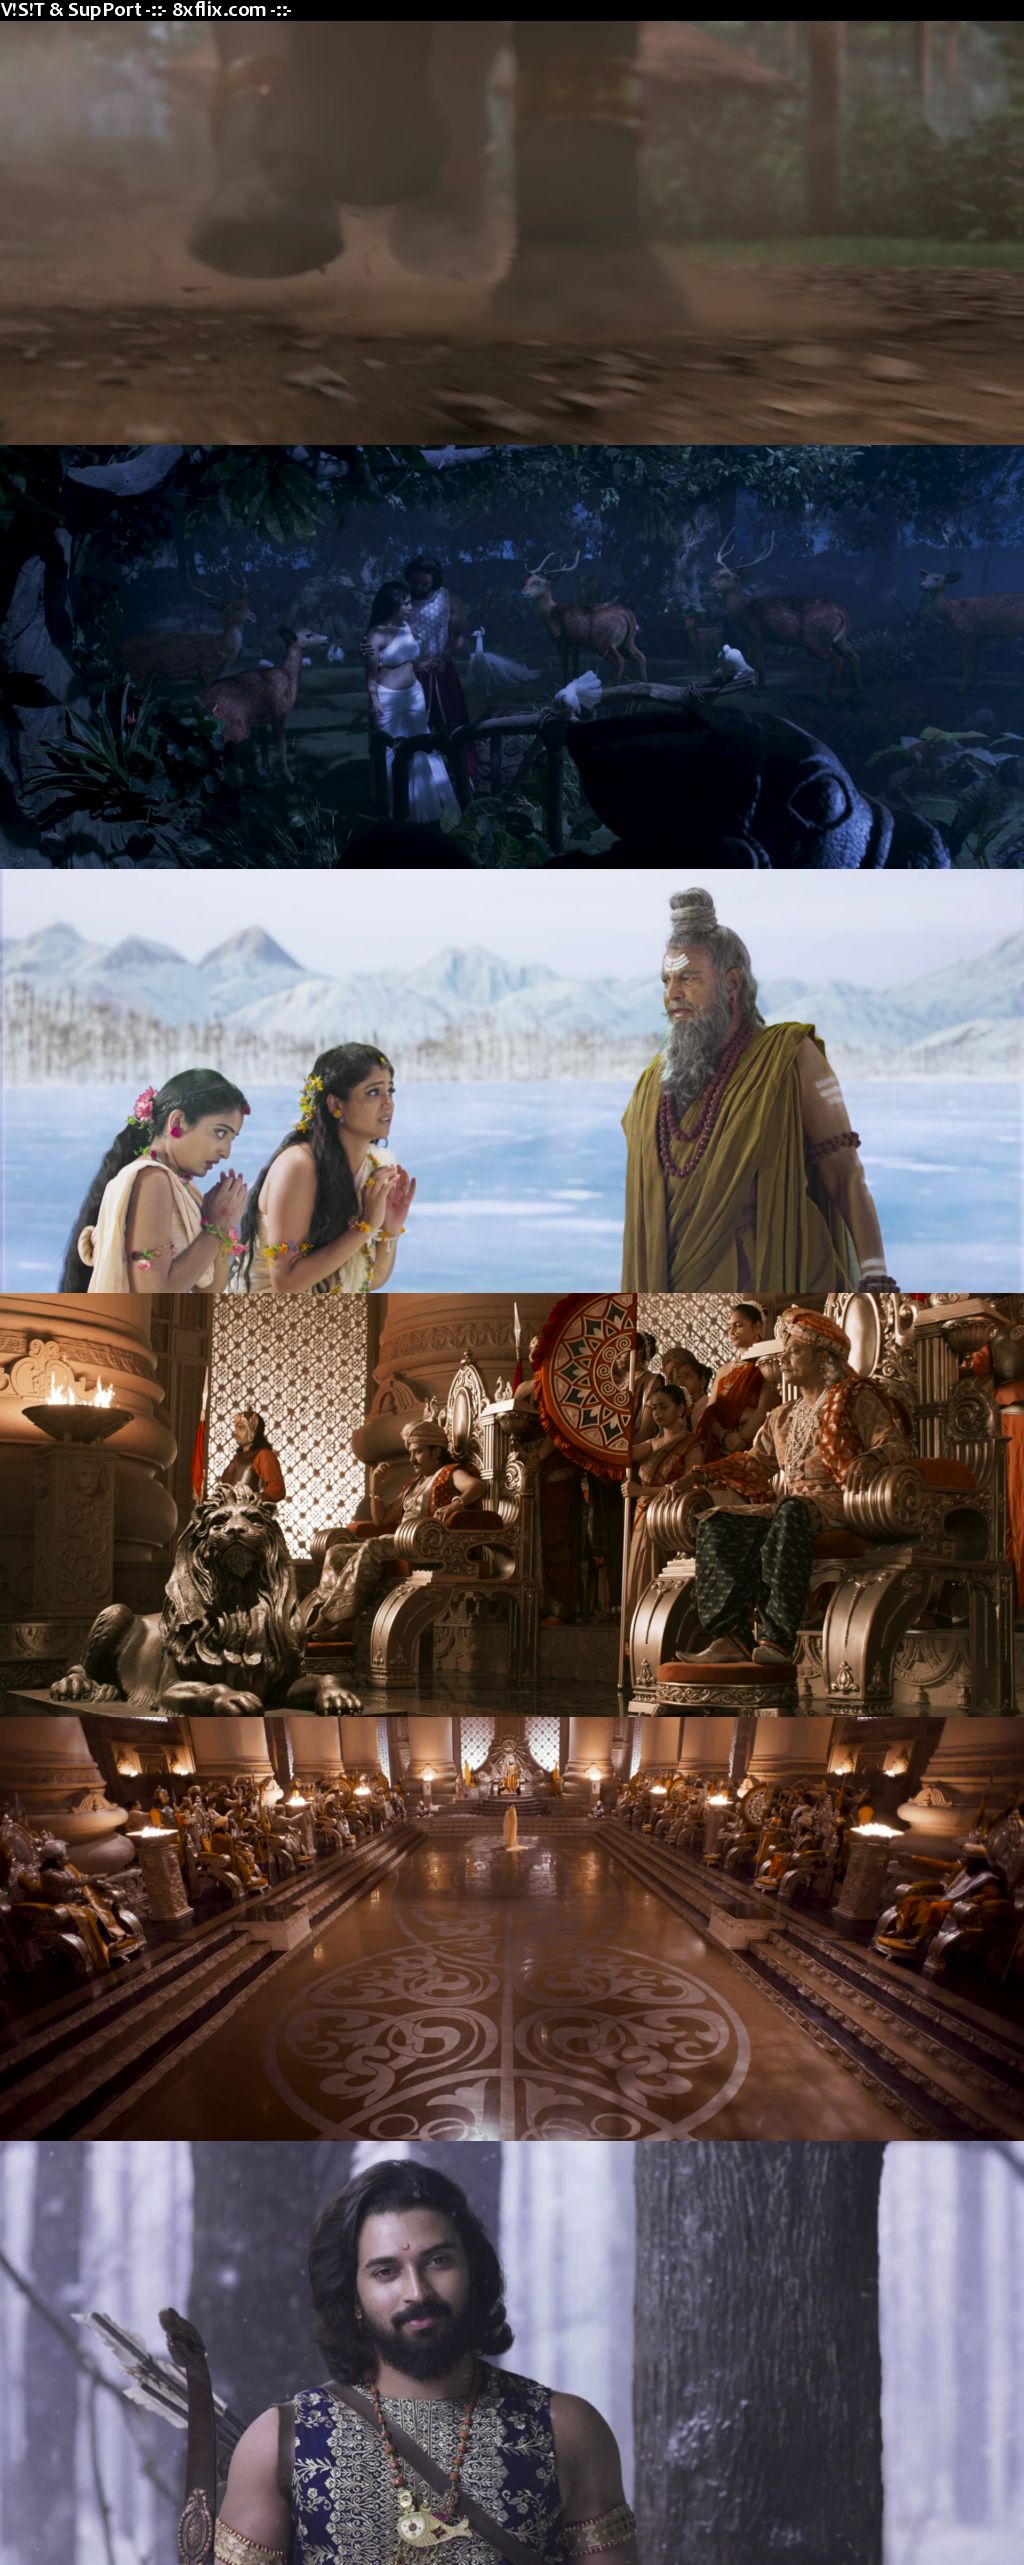 Shaakuntalam 2023 Full Hindi Movie 1080p 720p 480p Web-DL | Amazon Movie